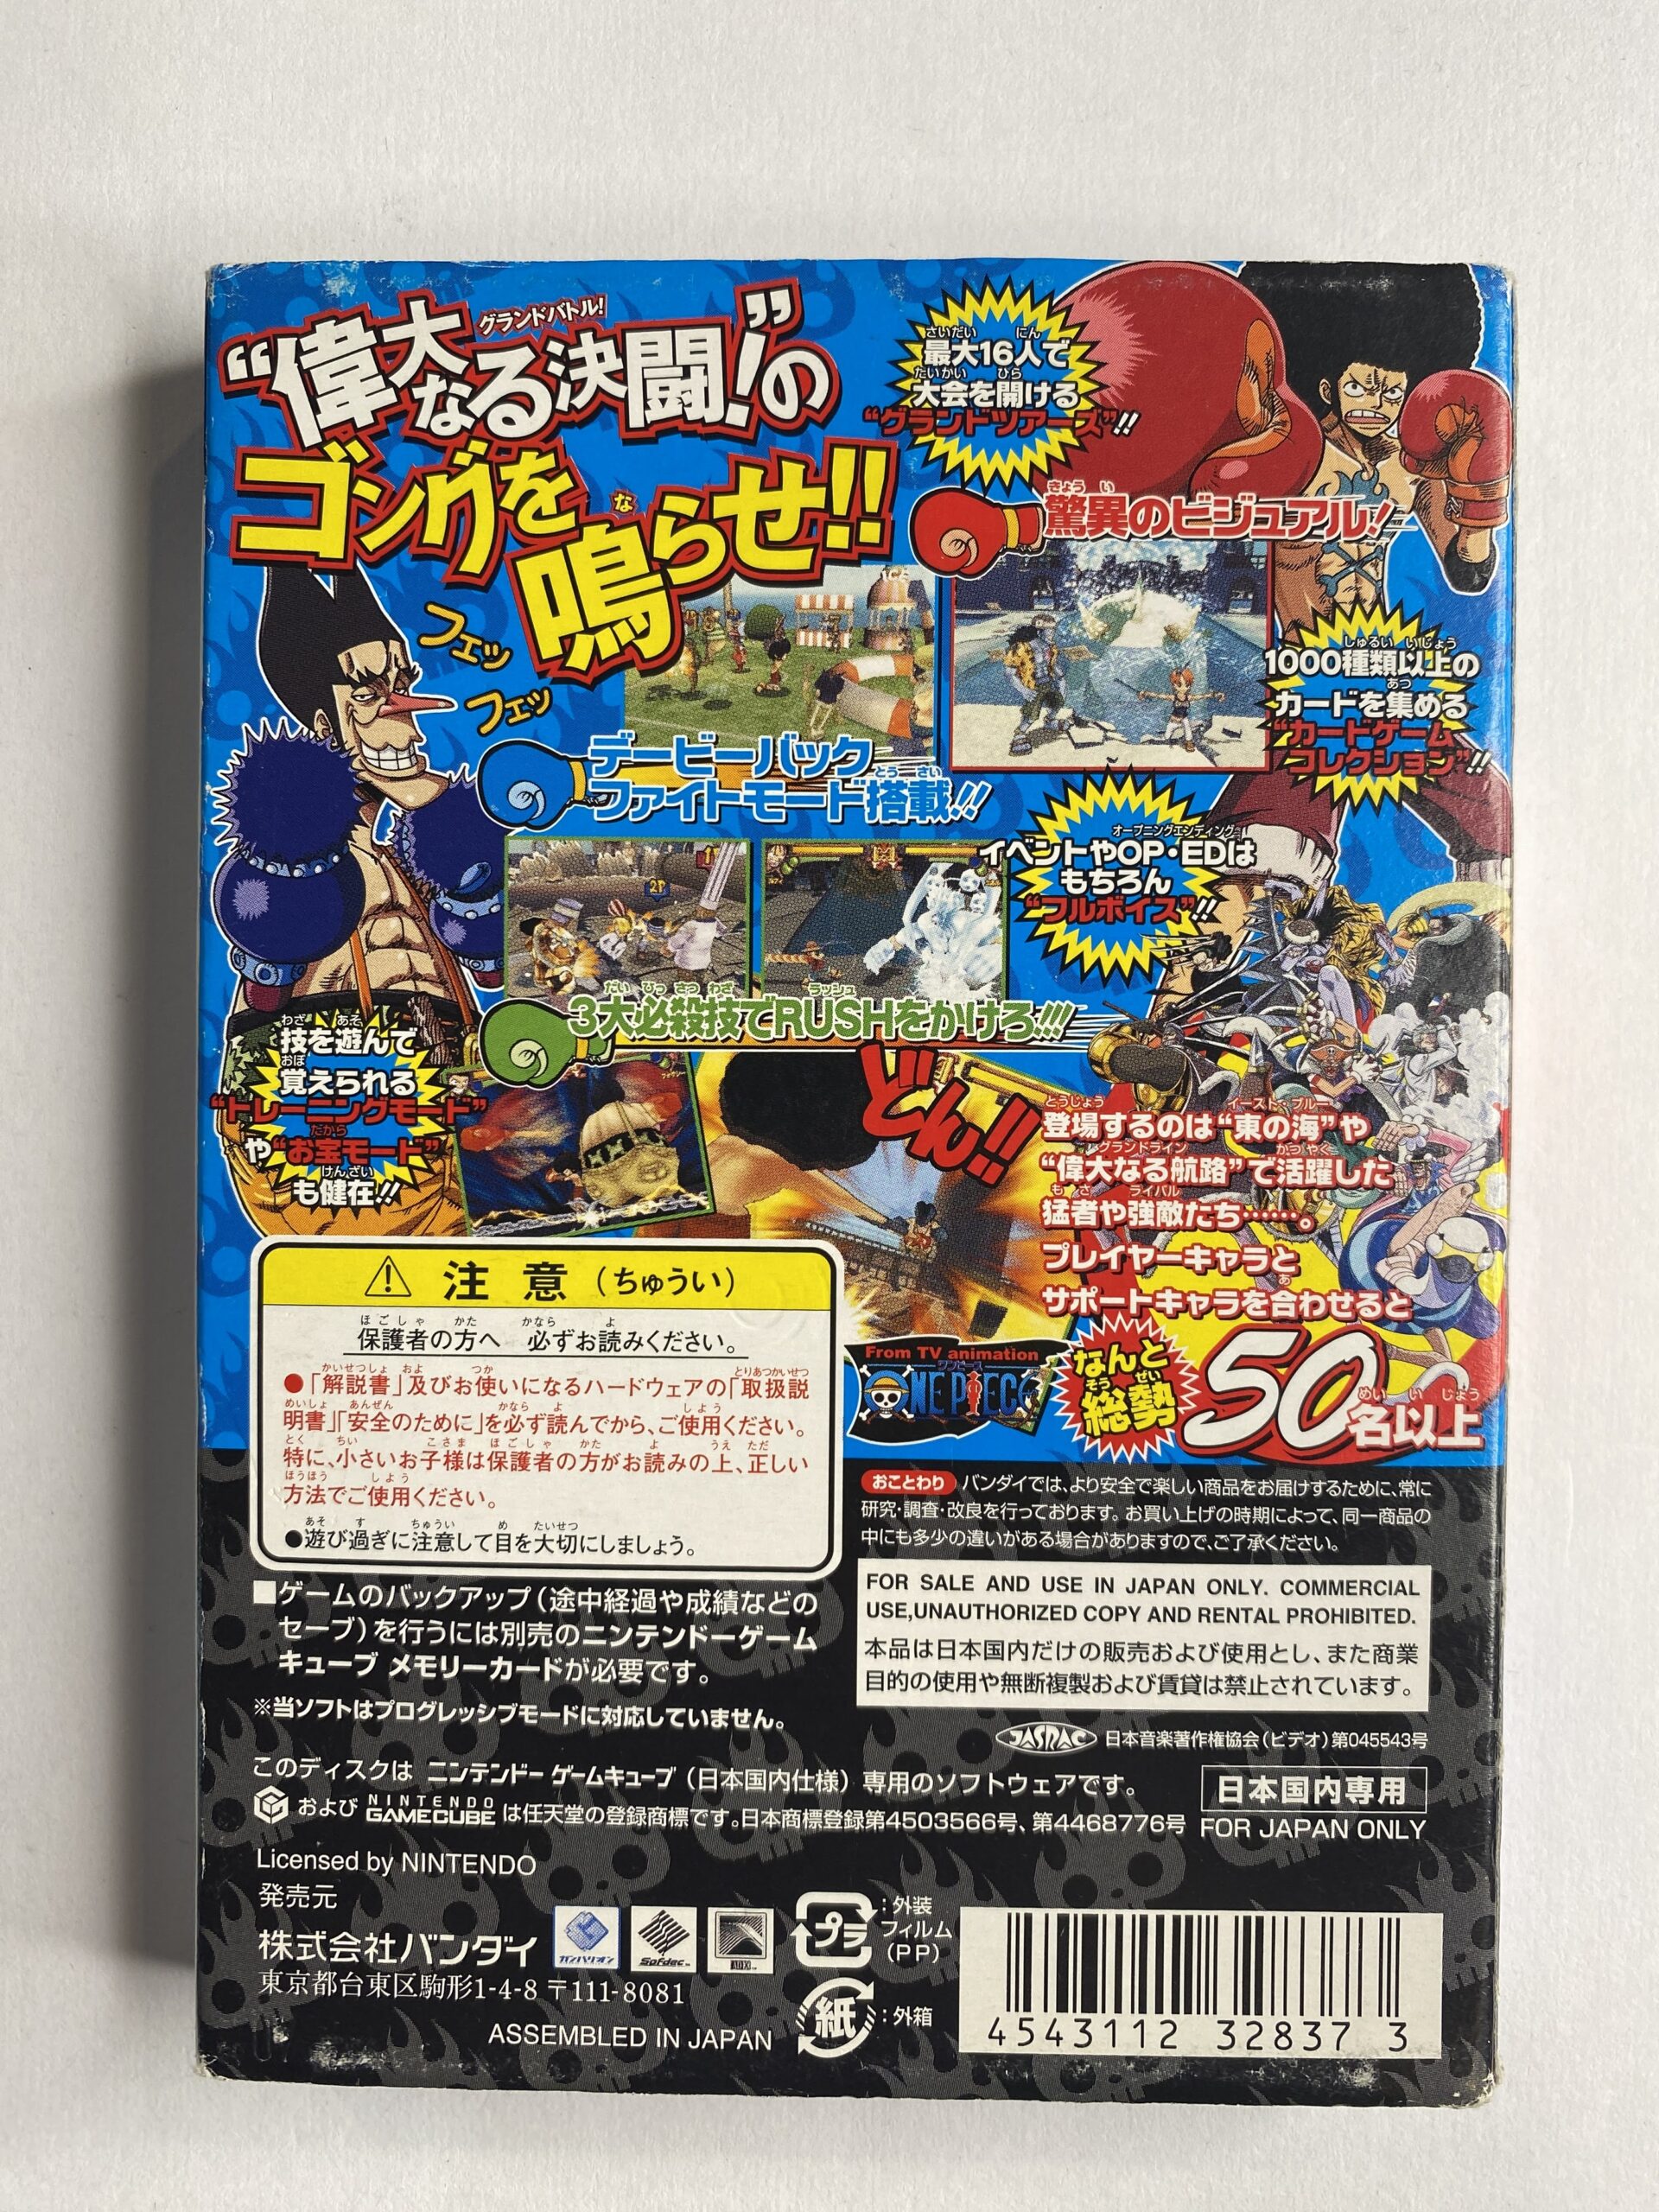 One Piece: Grand Battle (Nintendo GameCube, 2005) Video Game